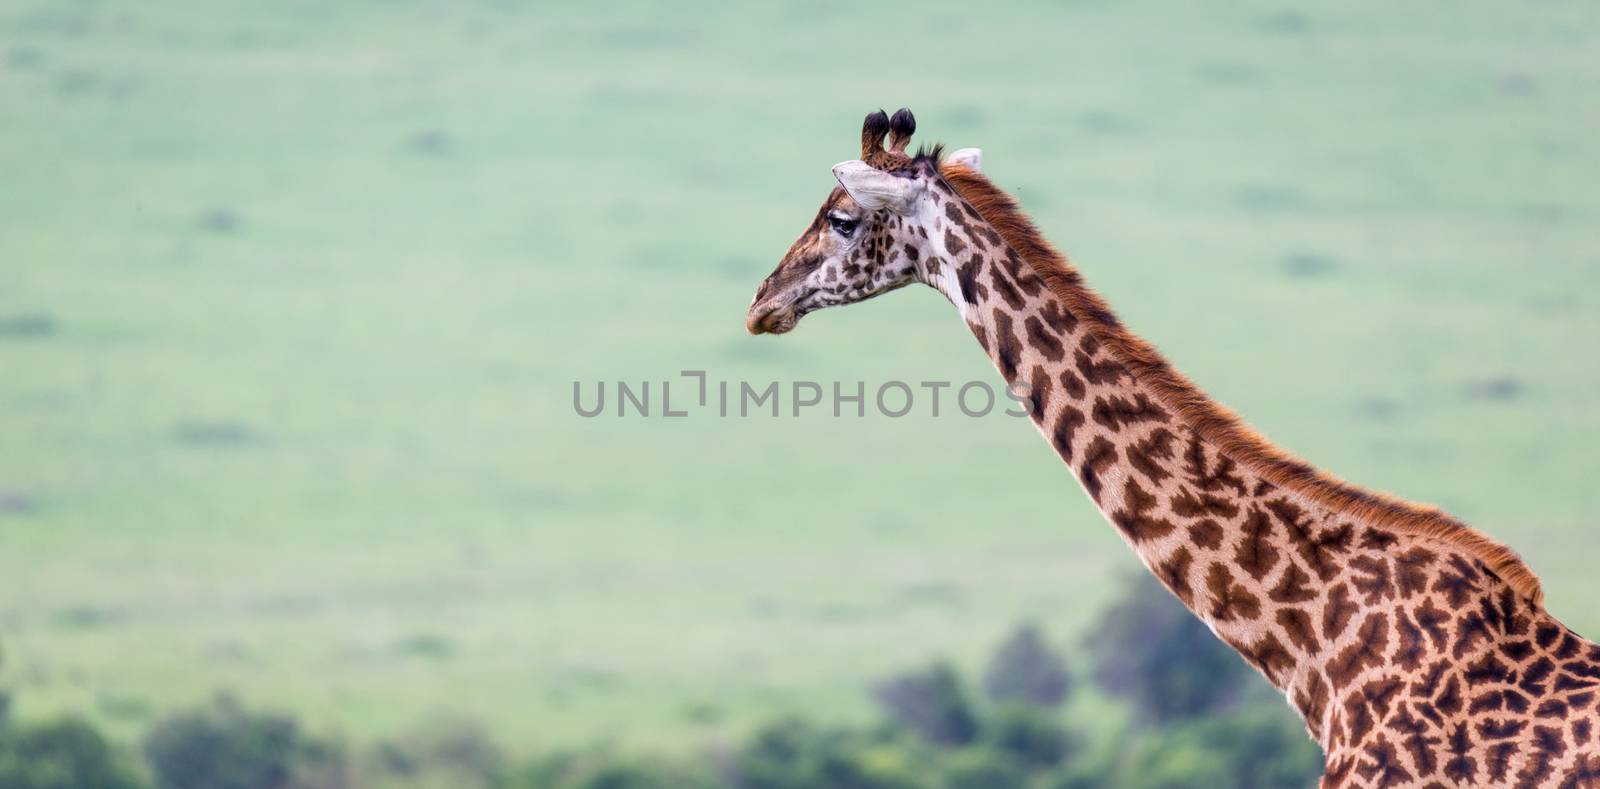 Masai giraffe in the Kenyan savanna on a meadow by 25ehaag6